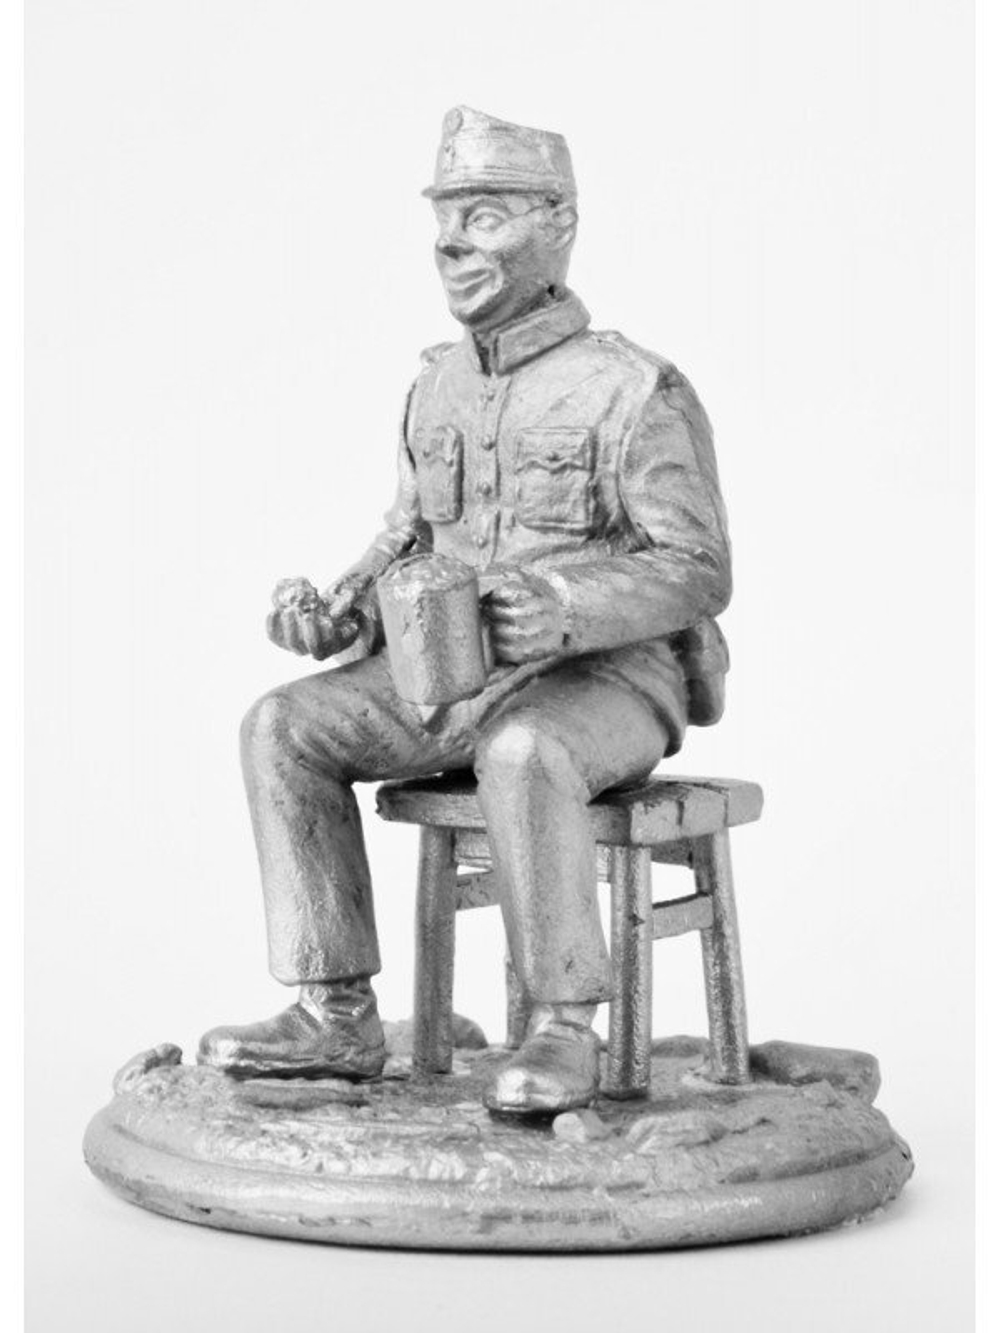 Оловянный солдатик Бравый солдат, 1915 г.